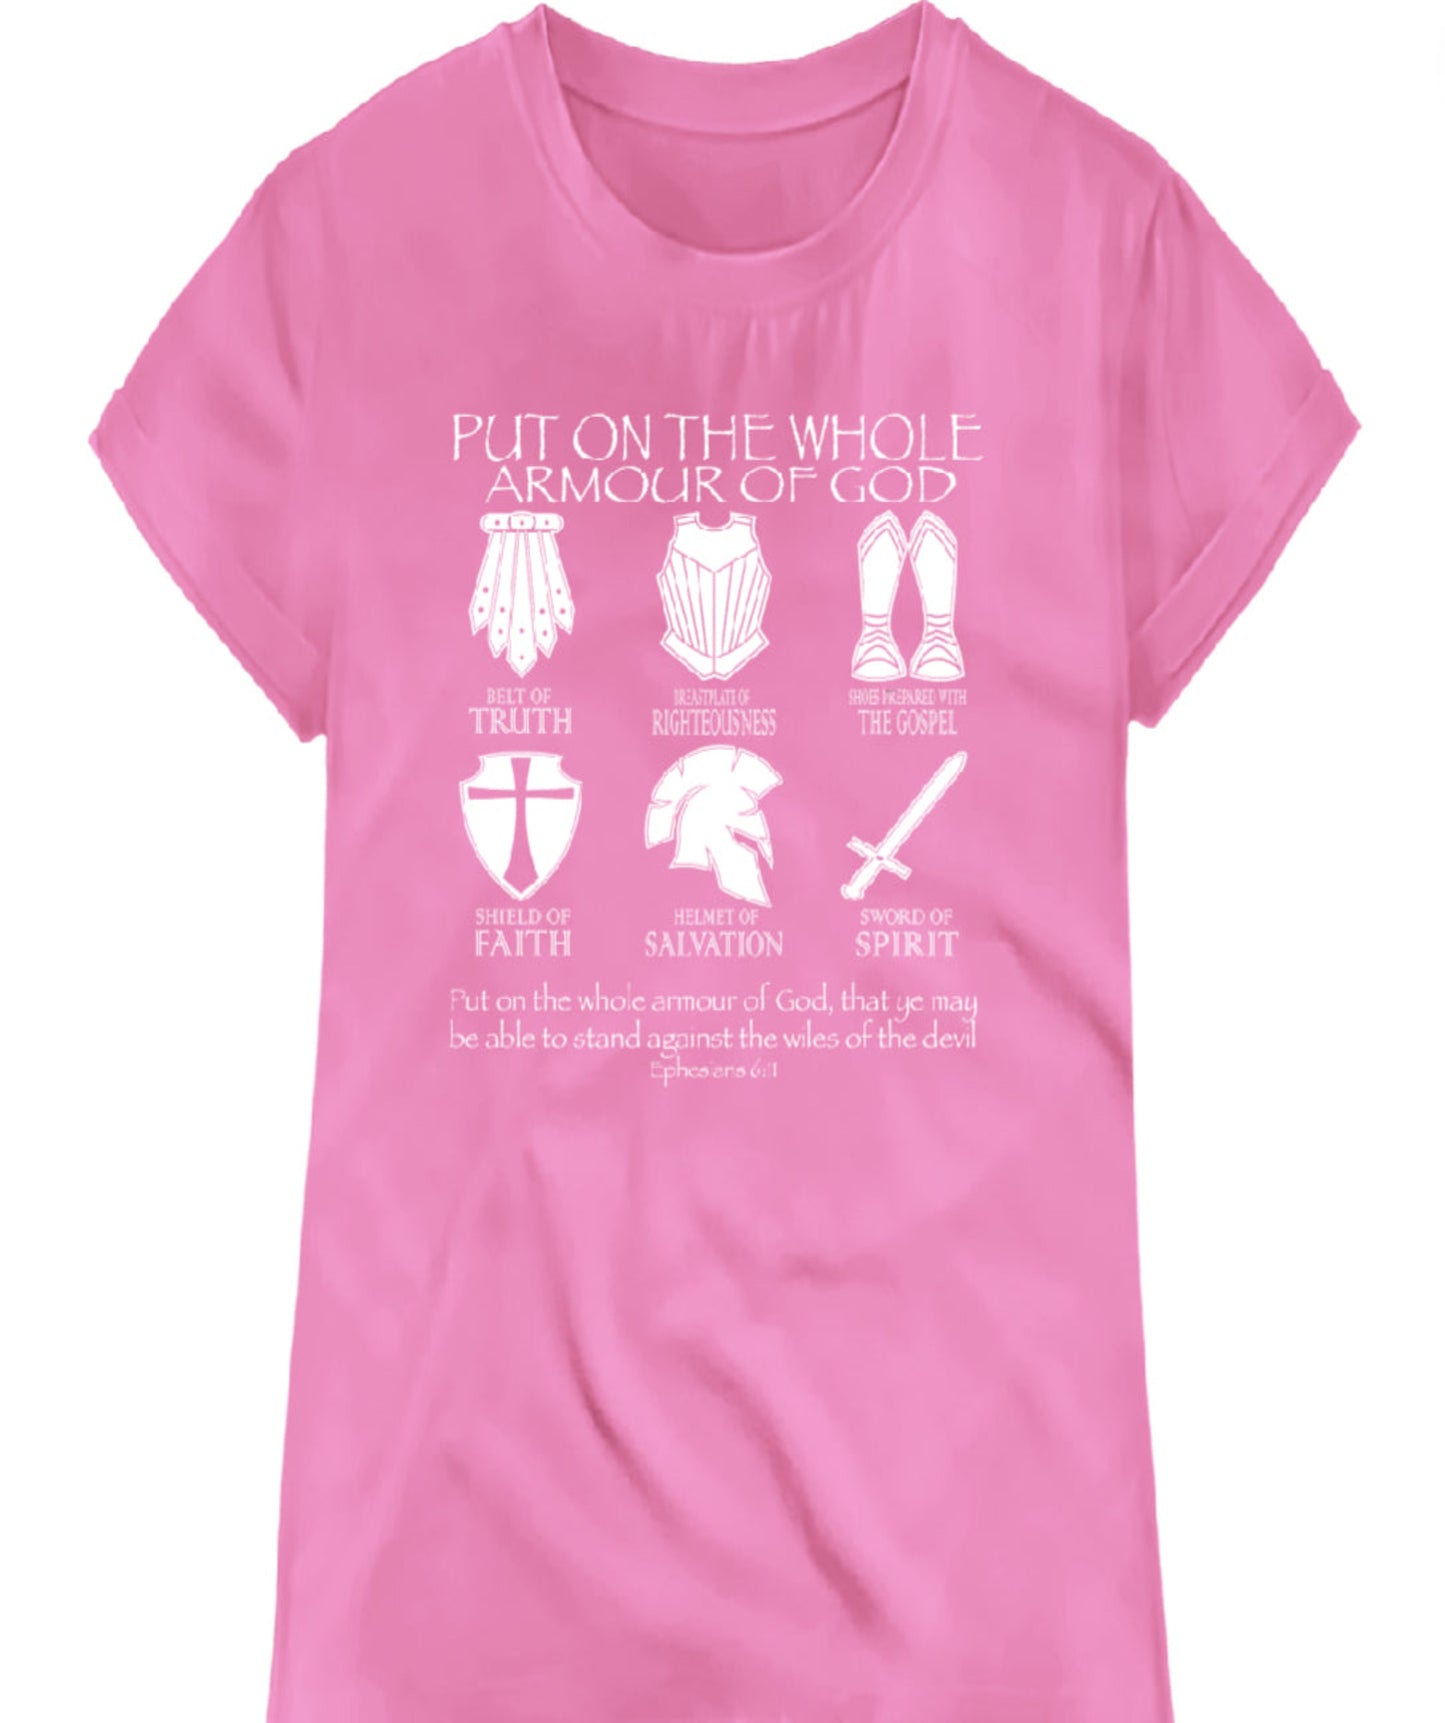 Graphic T-shirt (Purple, Pink, Black, Grey)